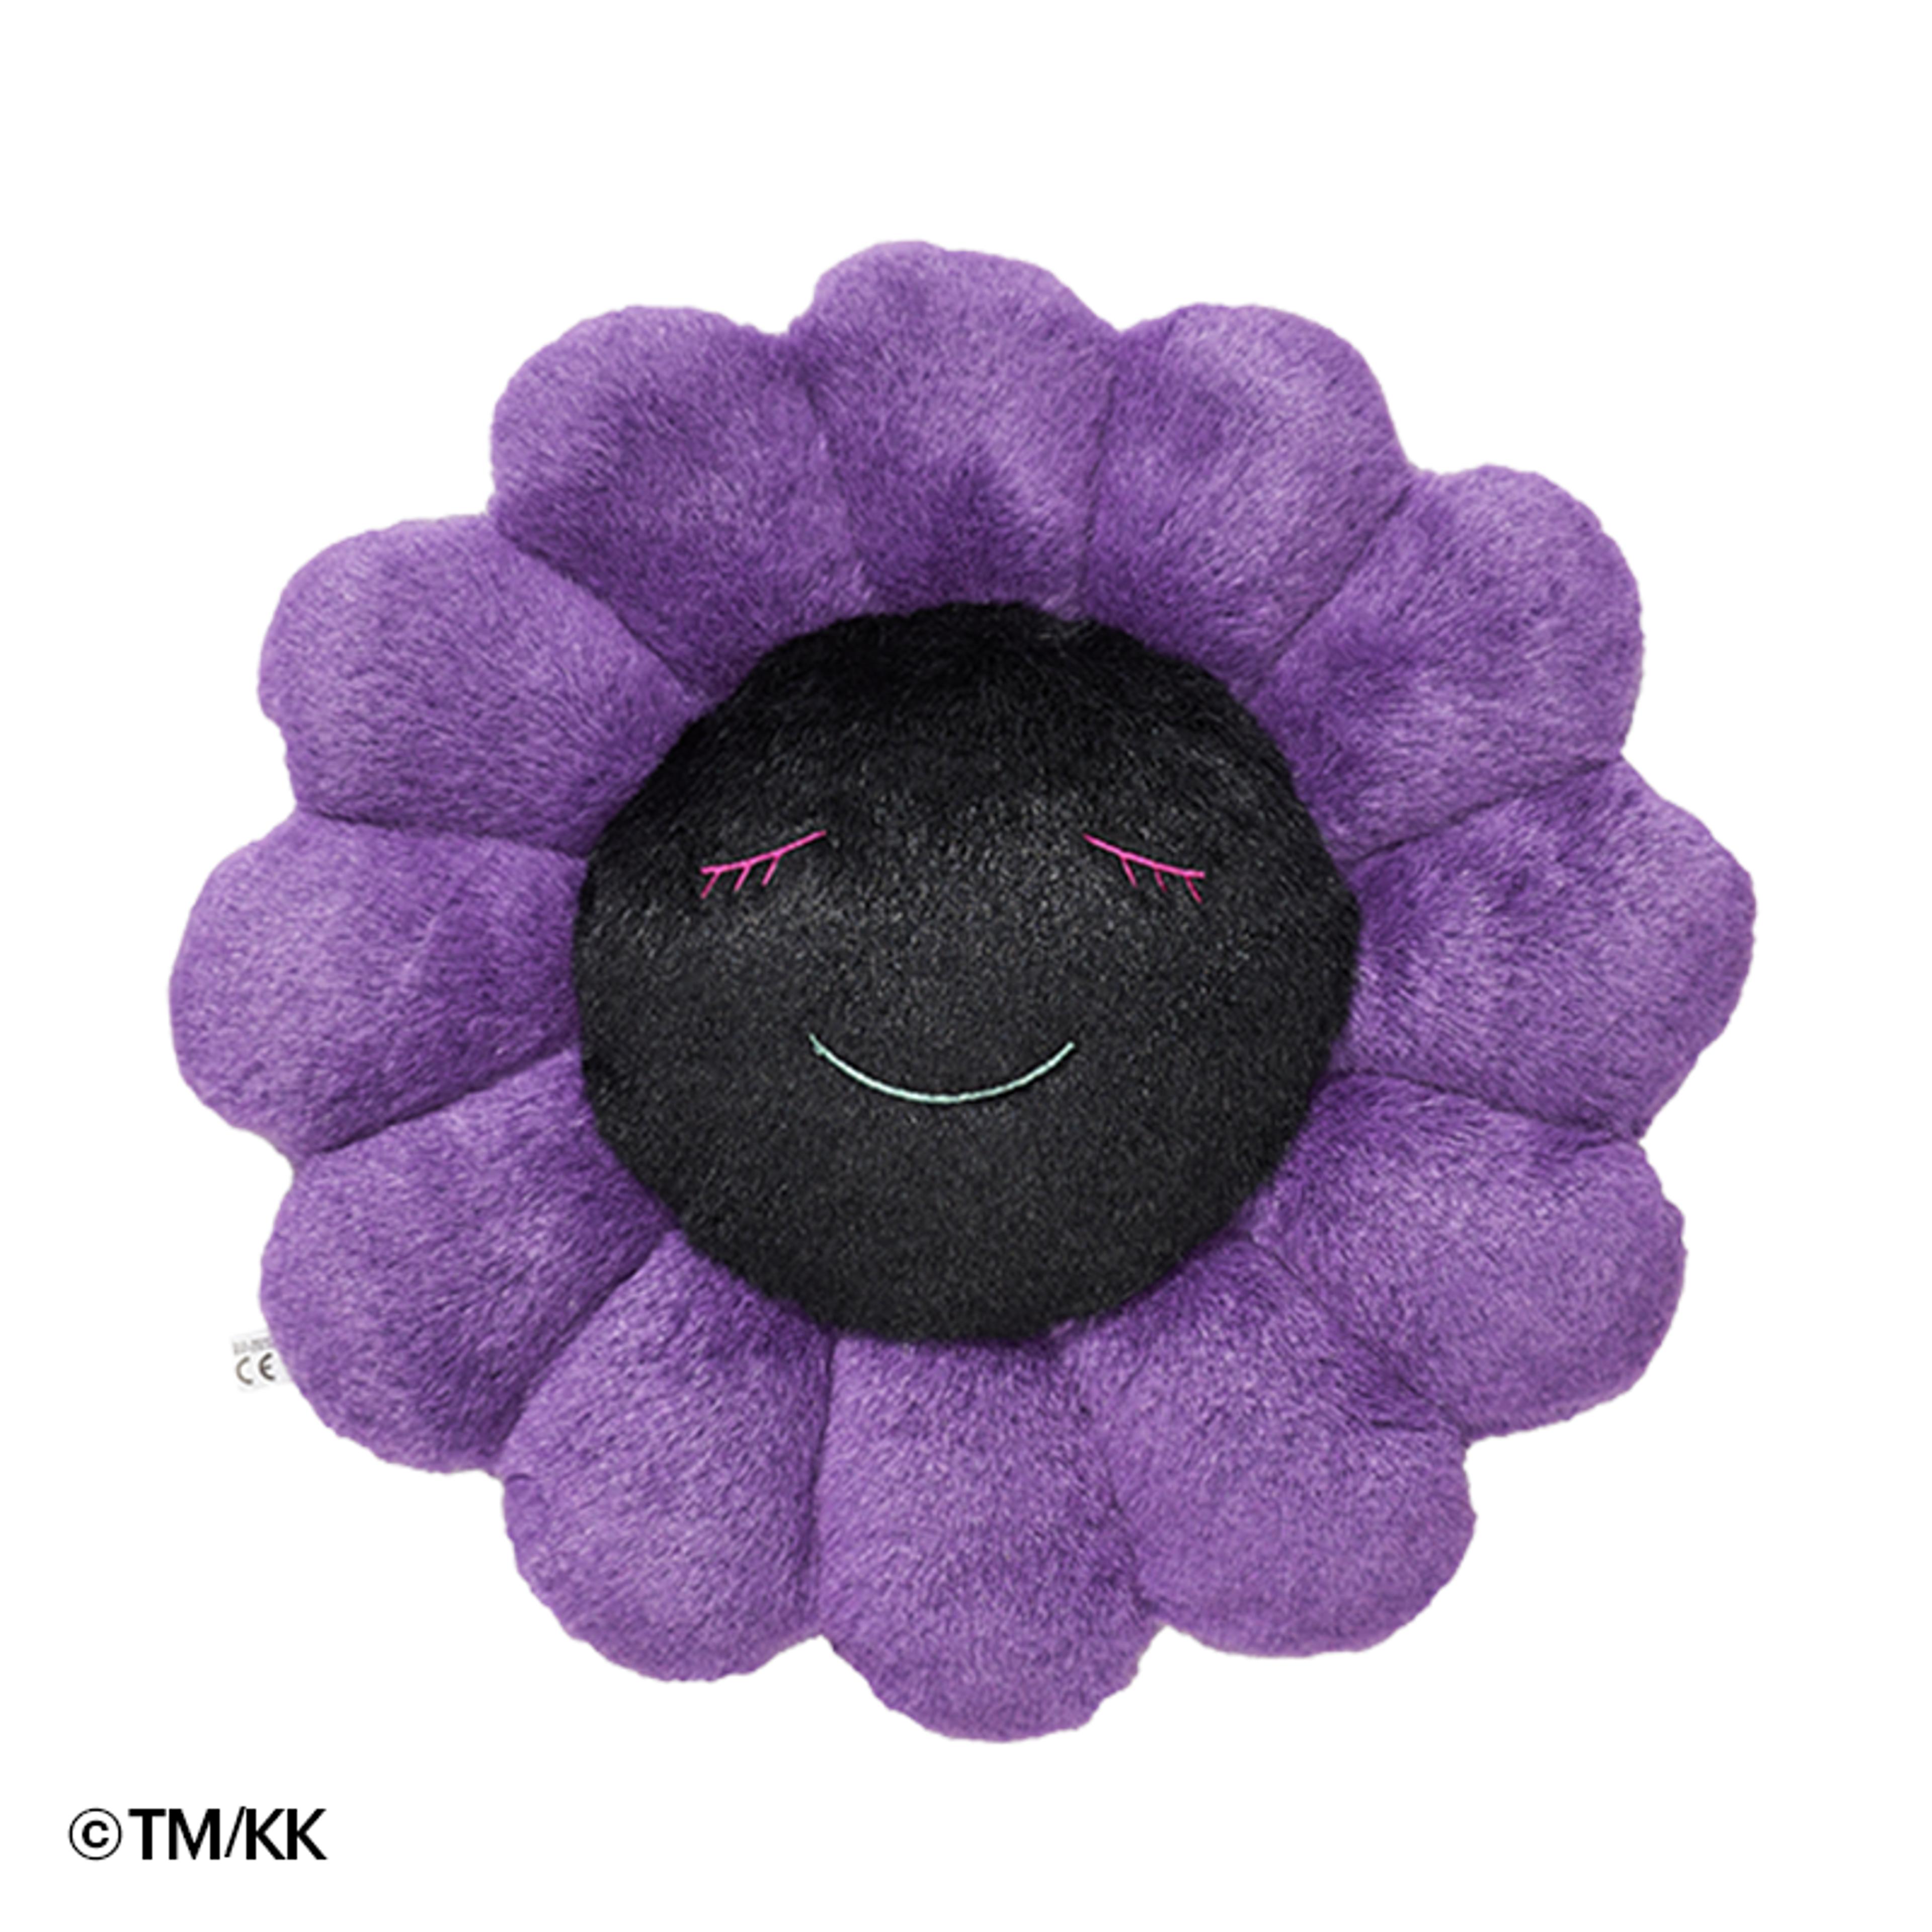 Flower Cushion 30cm Purple & Black